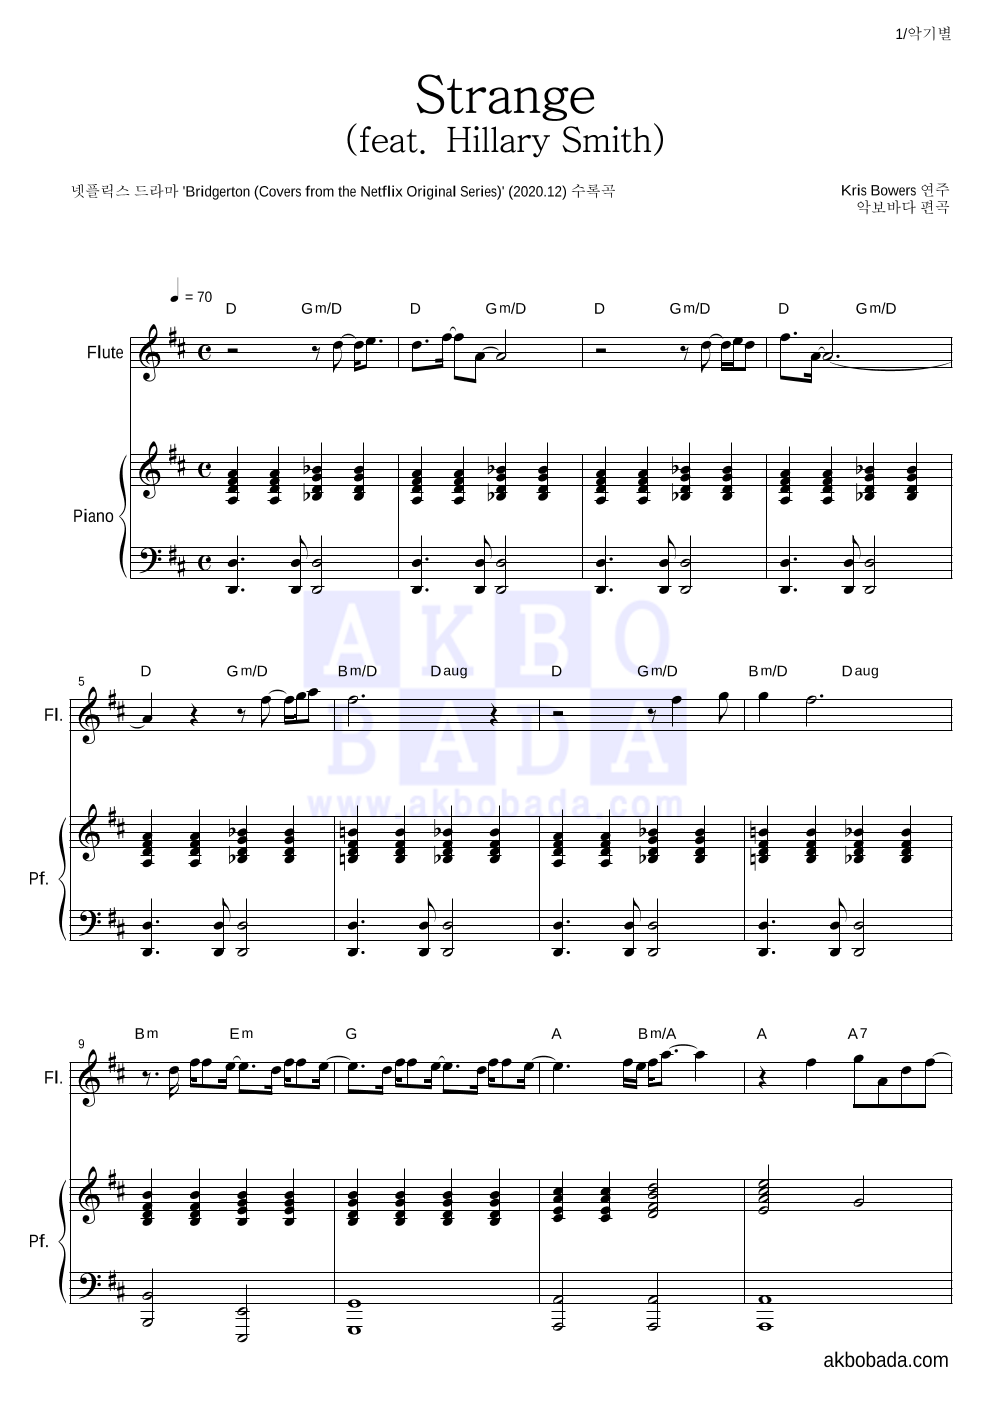 Kris Bowers - Strange (feat. Hillary Smith) (Feat. Hillary Smith) 플룻&피아노 악보 